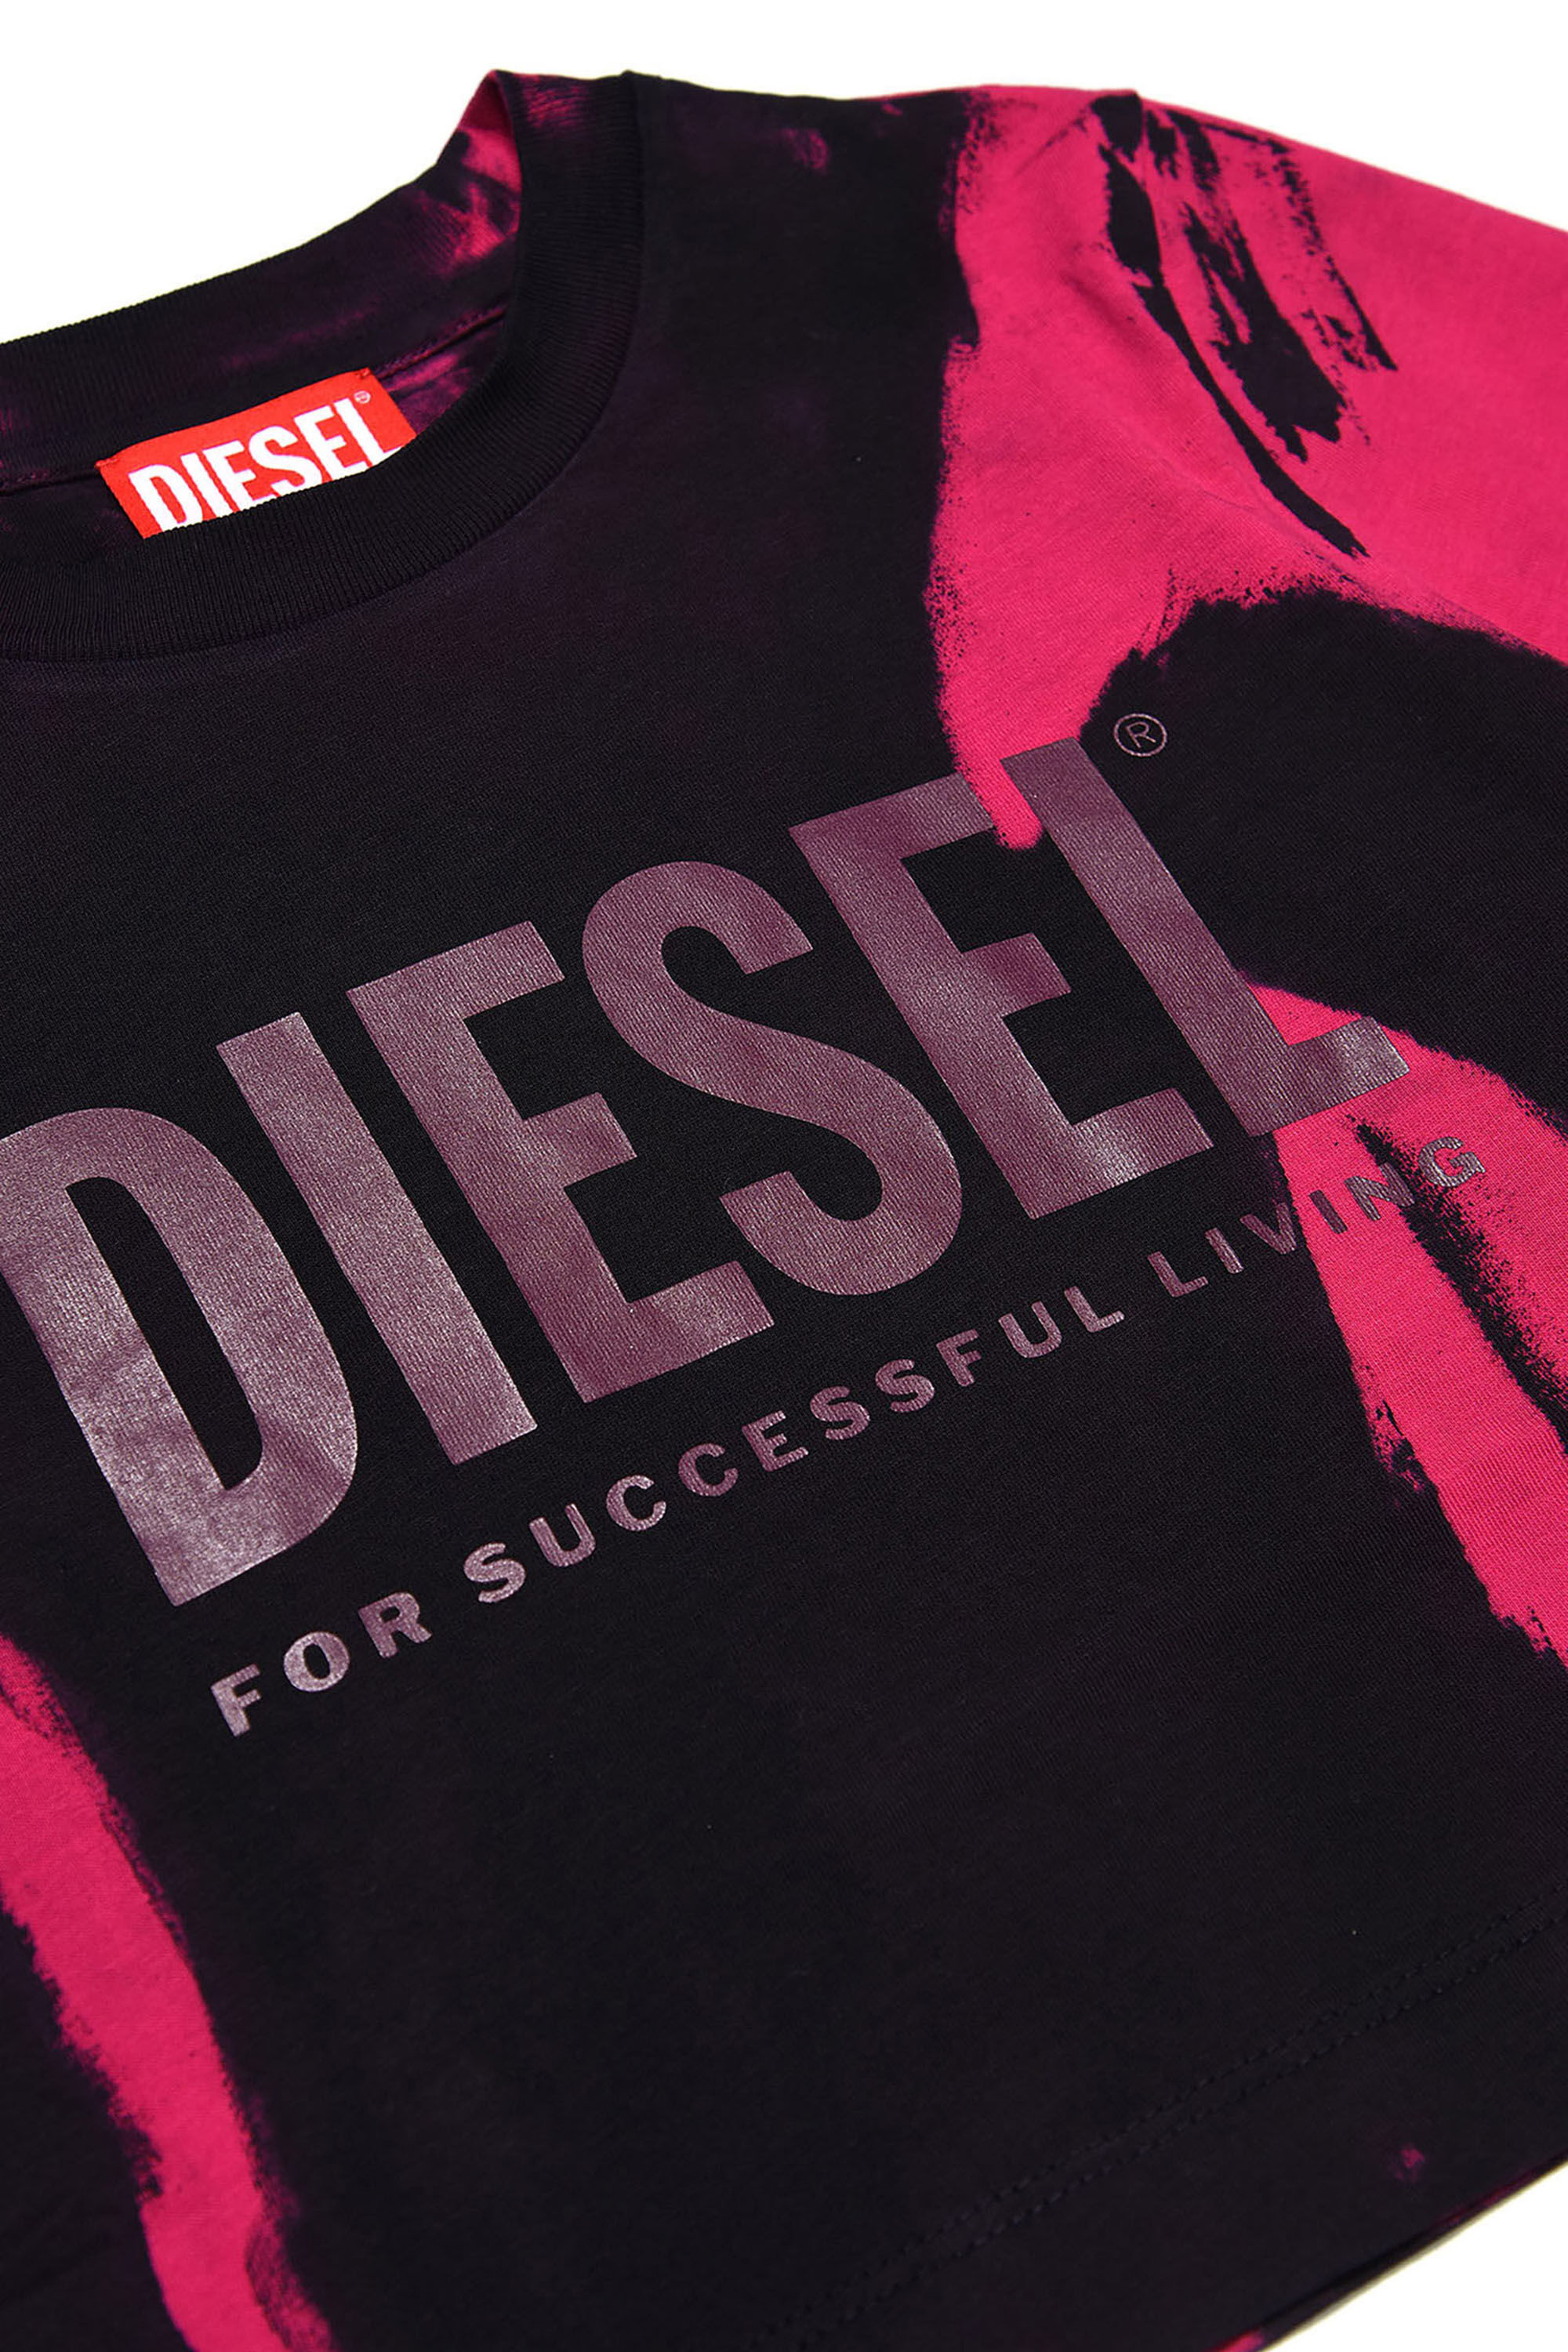 Diesel - TRECROWT&D, Noir/Rose - Image 3